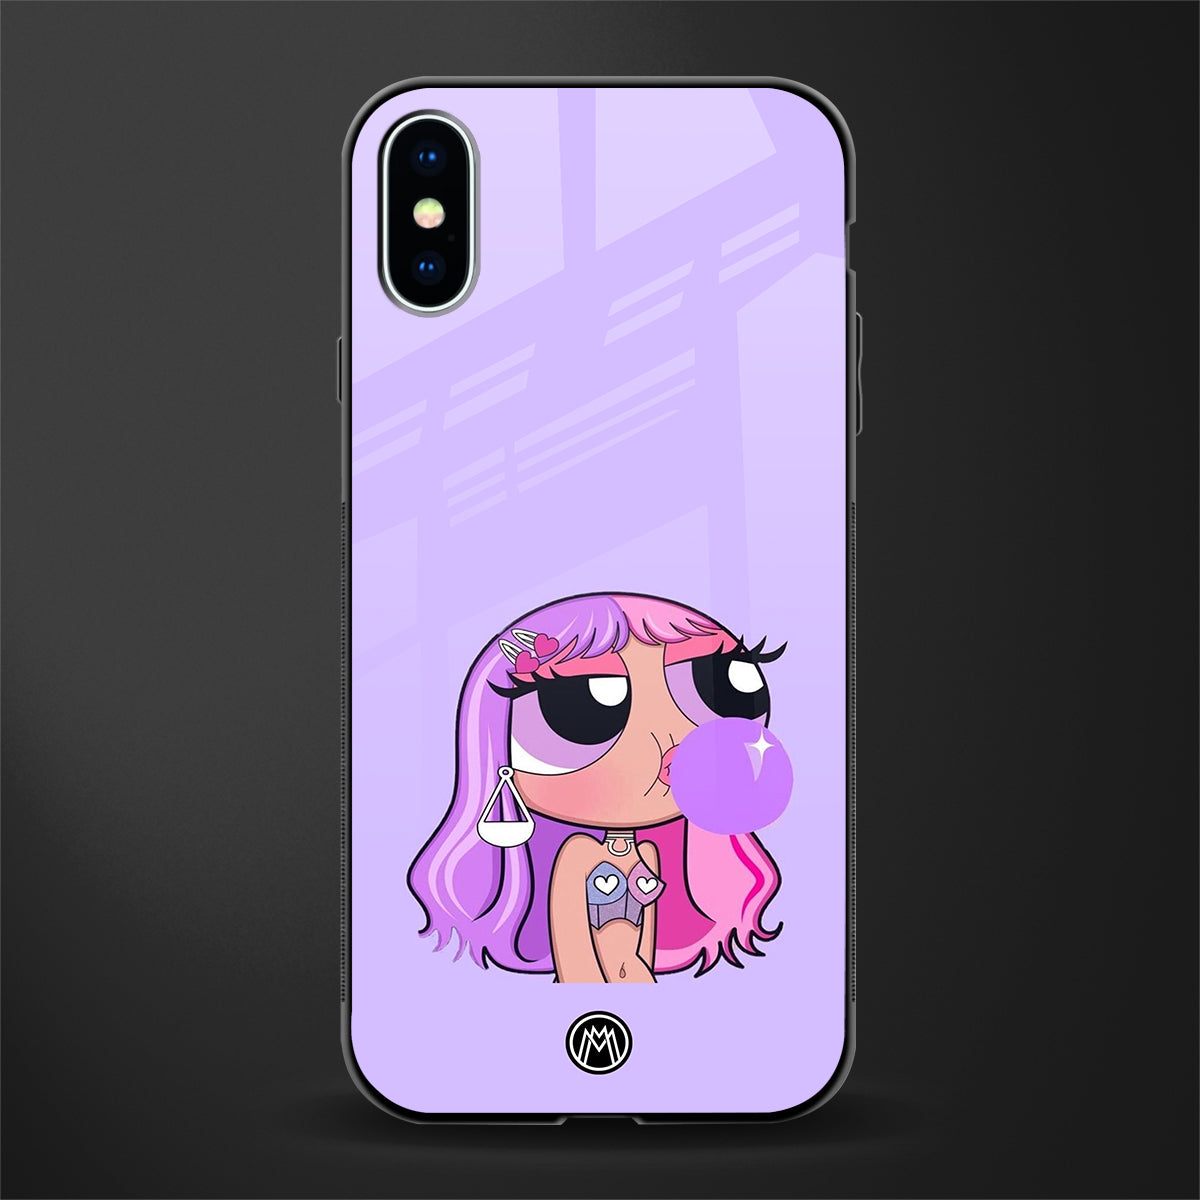 purple chic powerpuff girls glass case for iphone x image